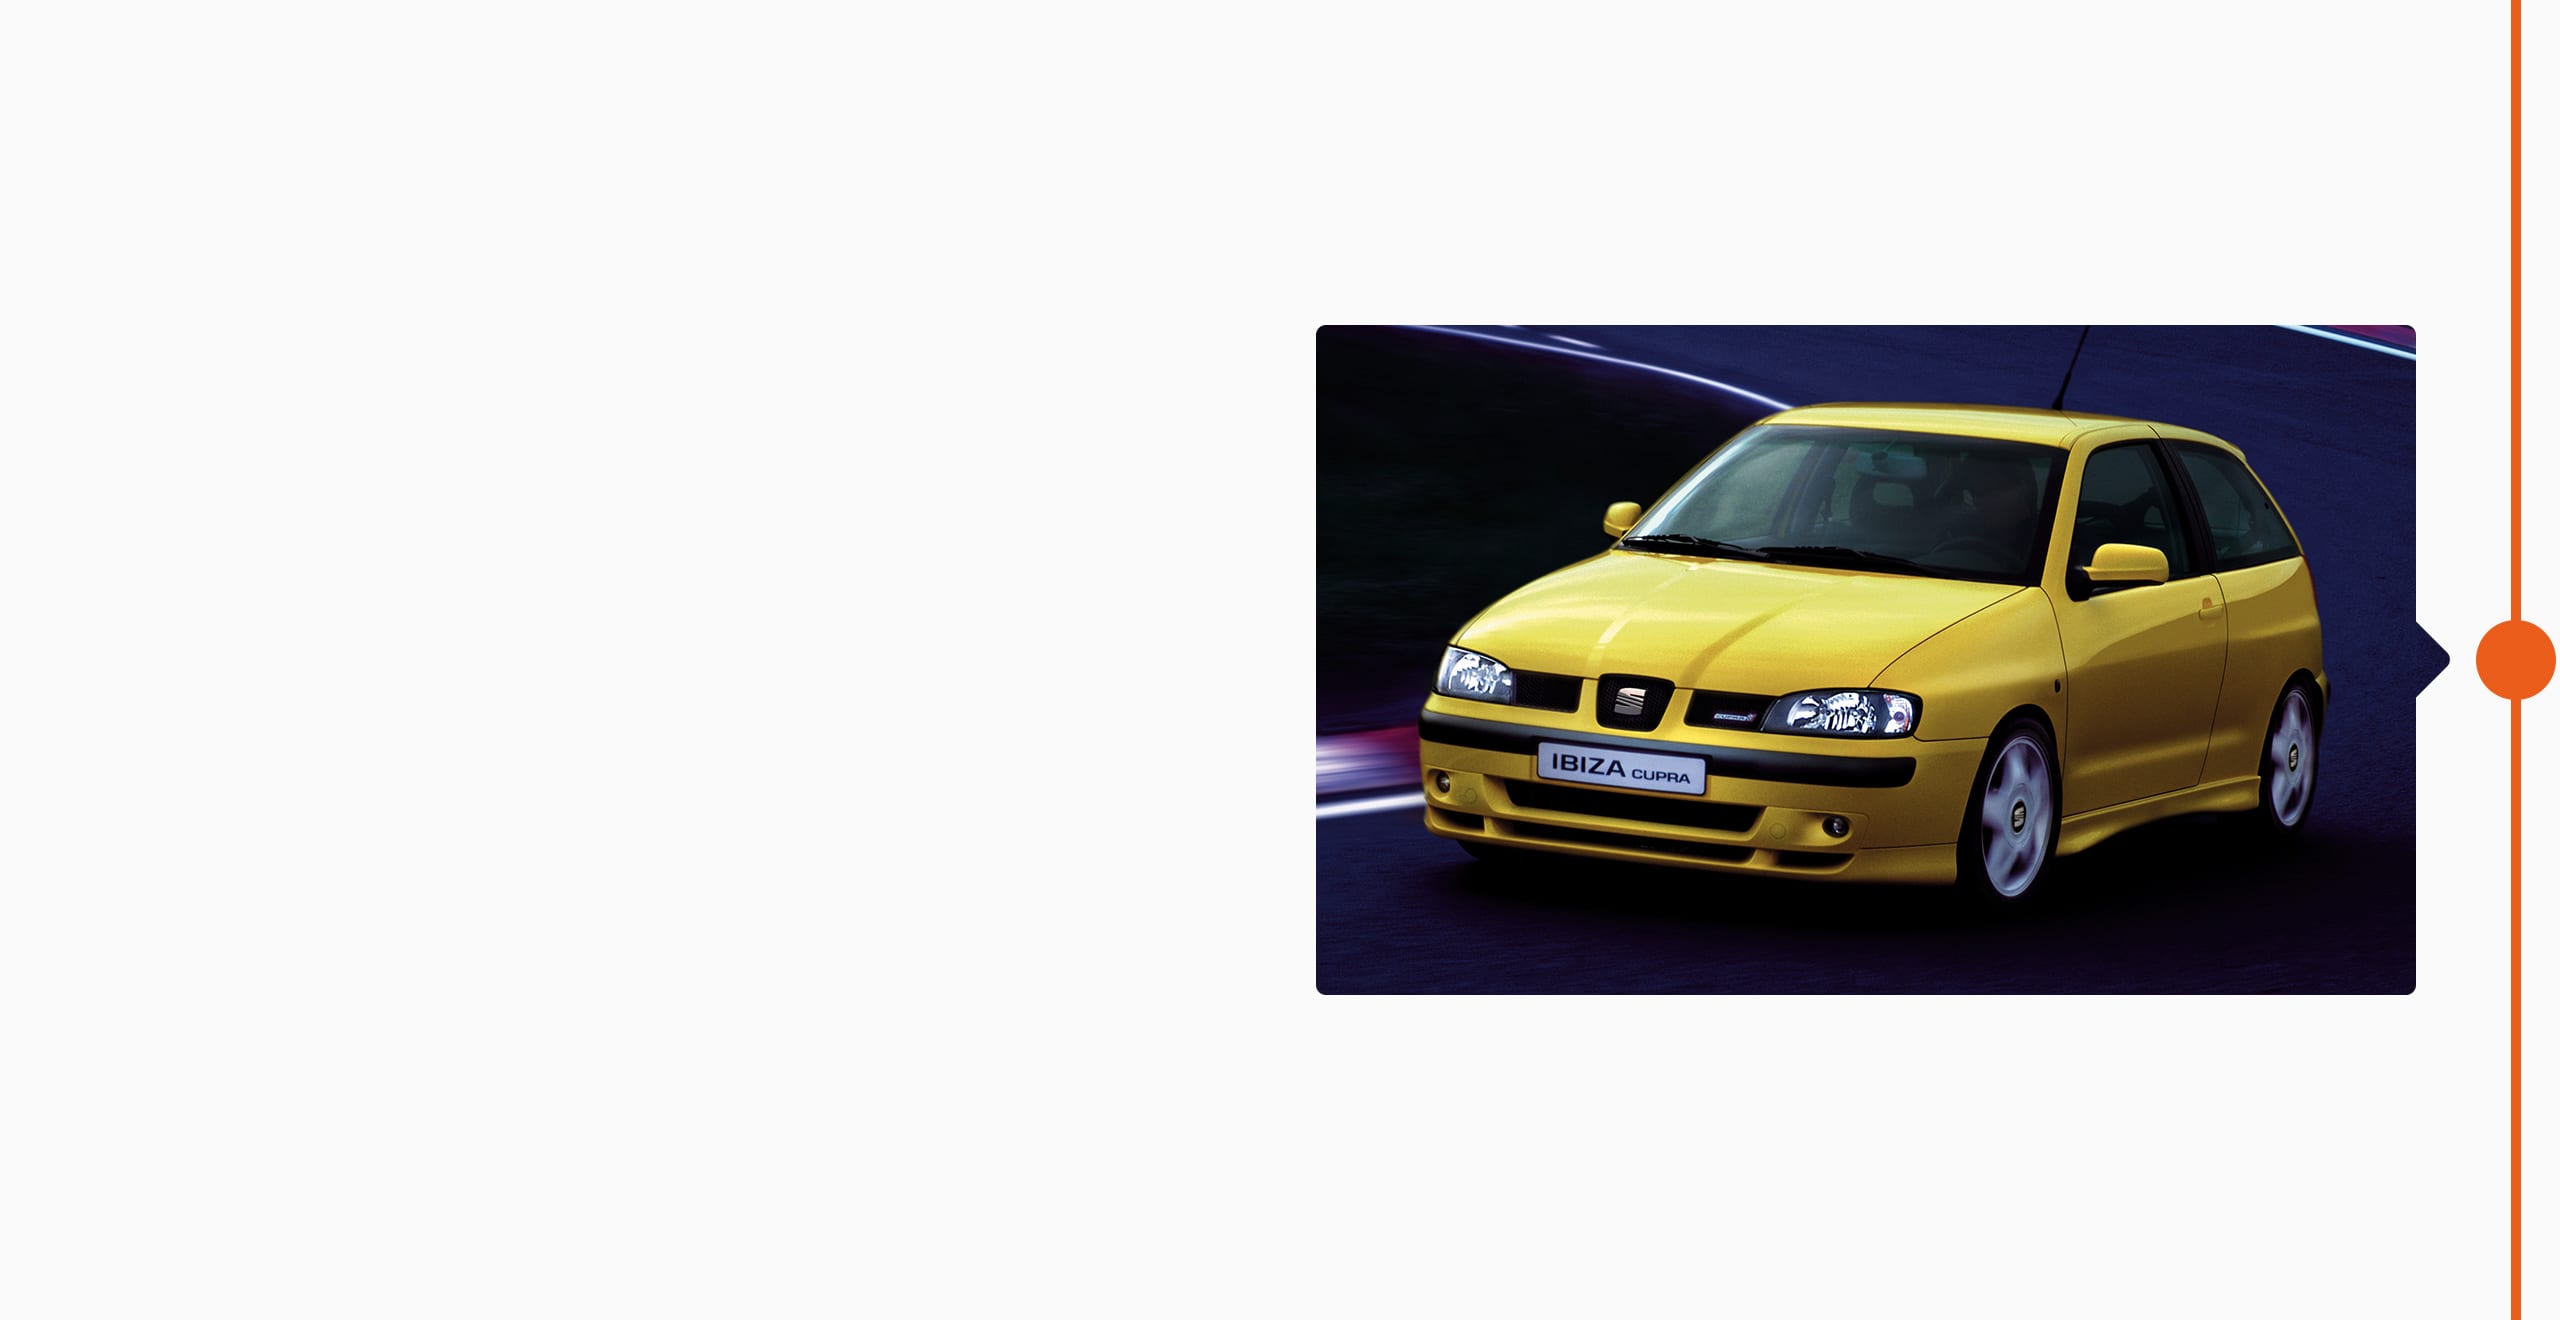 Vista frontal del SEAT Ibiza CUPRA de 1996